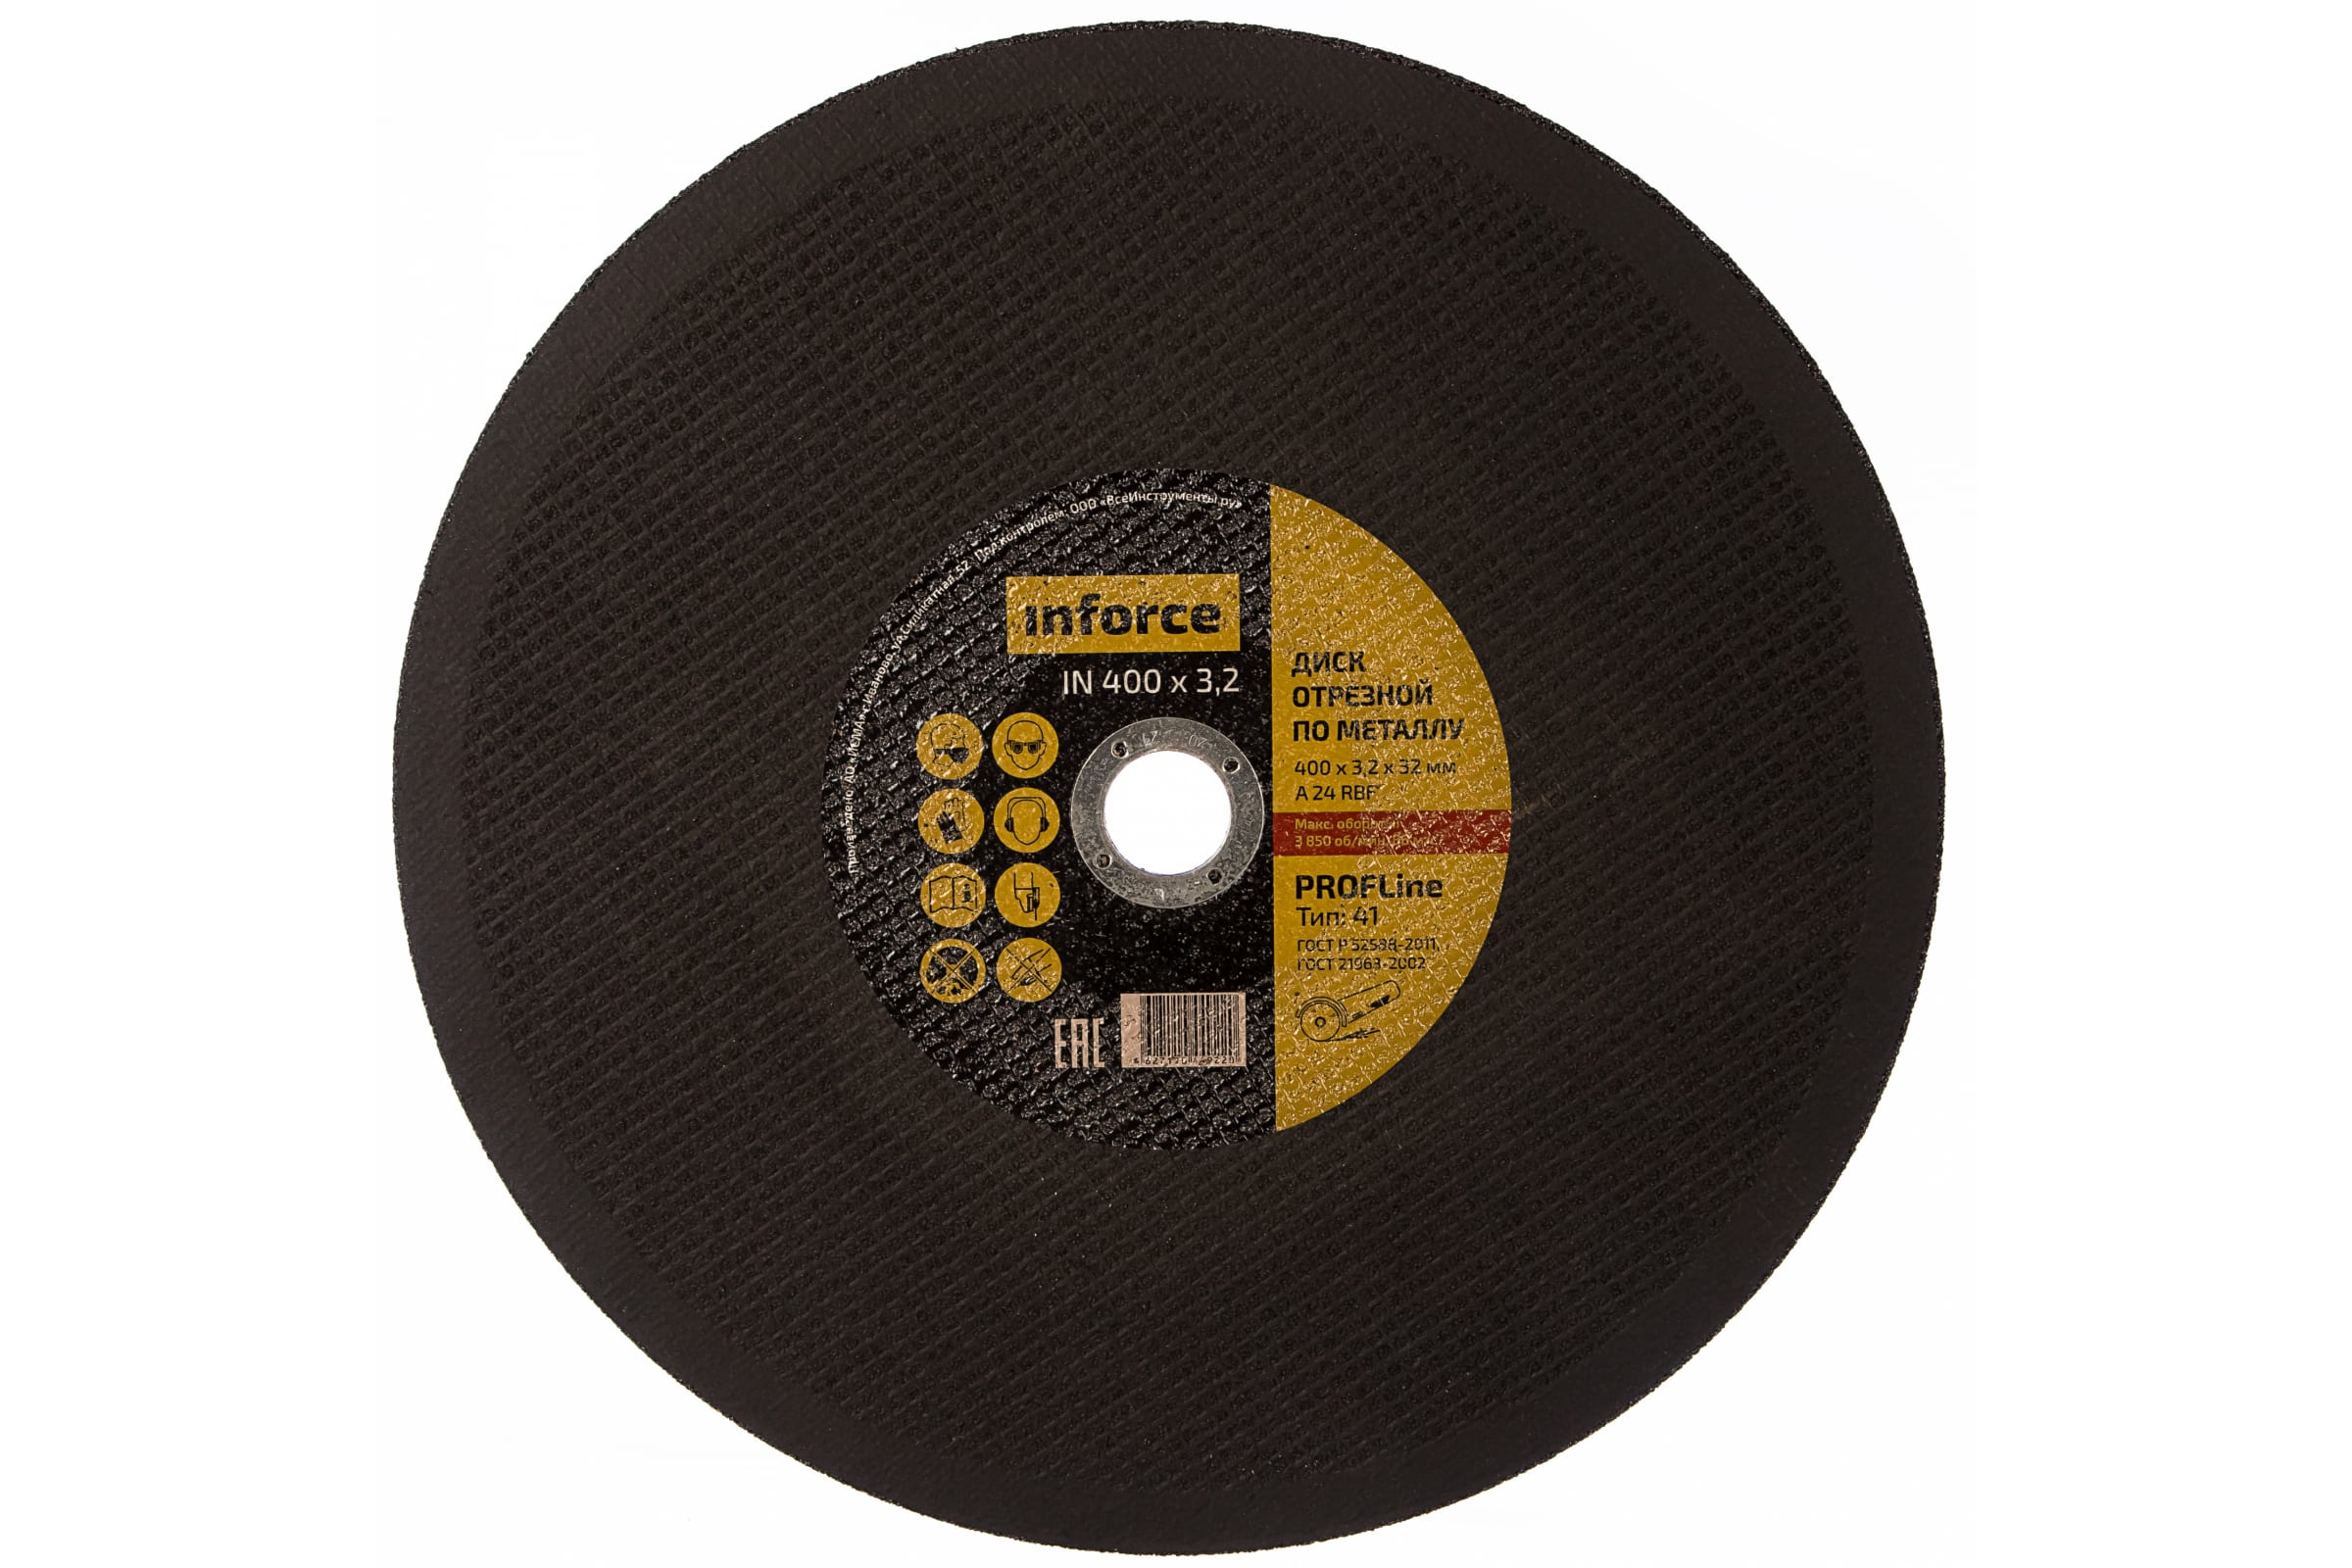 фото Inforce диск отрезной по металлу 400x32x3,2 мм 11-01-109